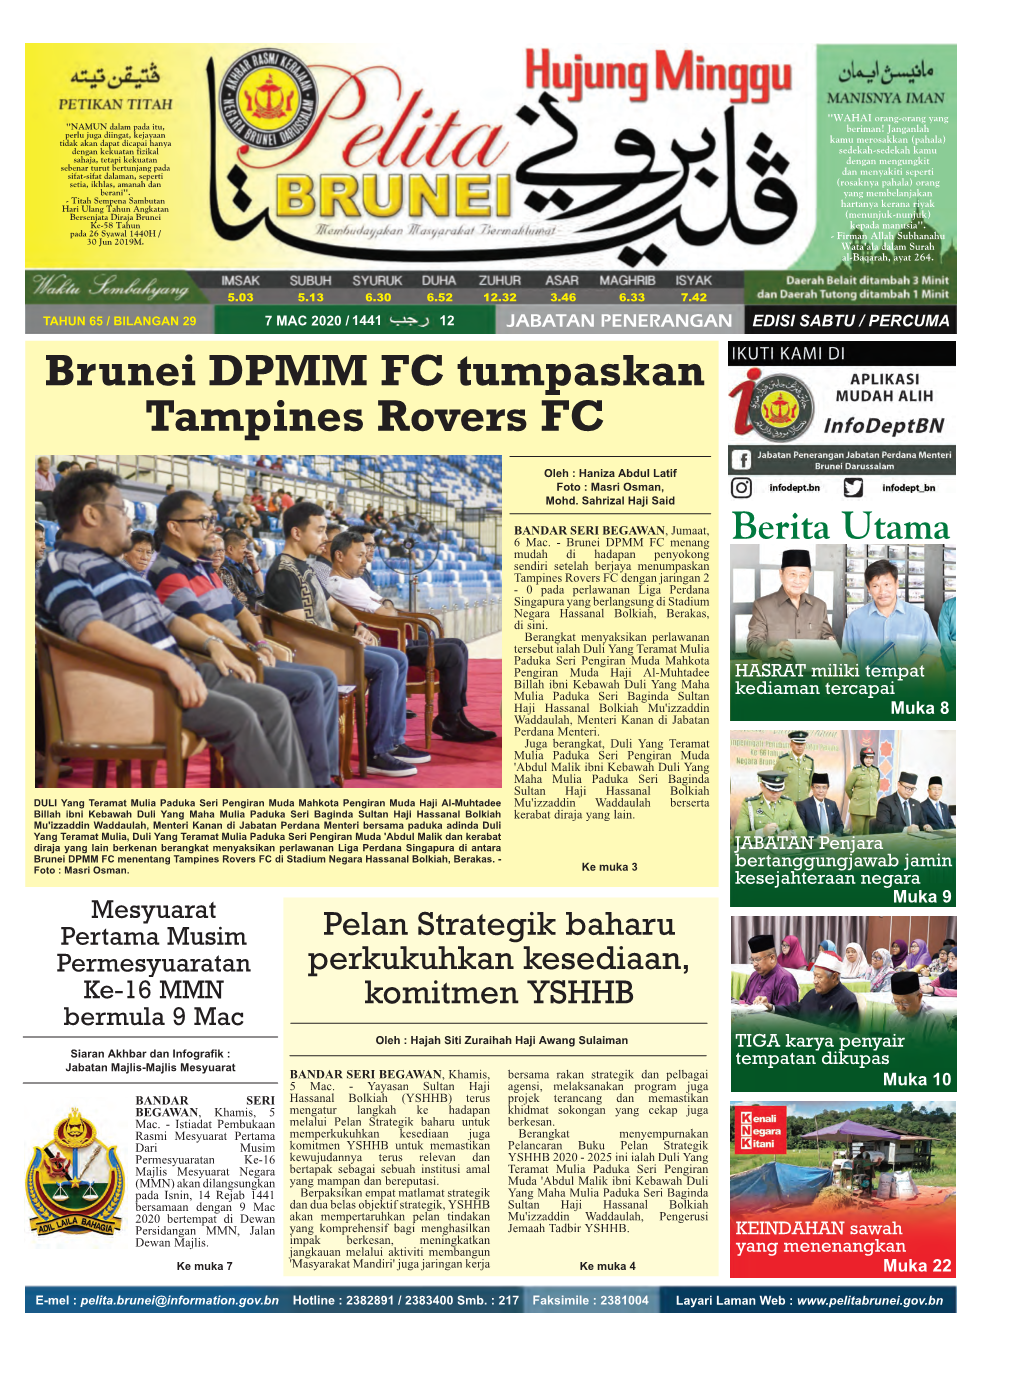 Brunei DPMM FC Tumpaskan Tampines Rovers FC